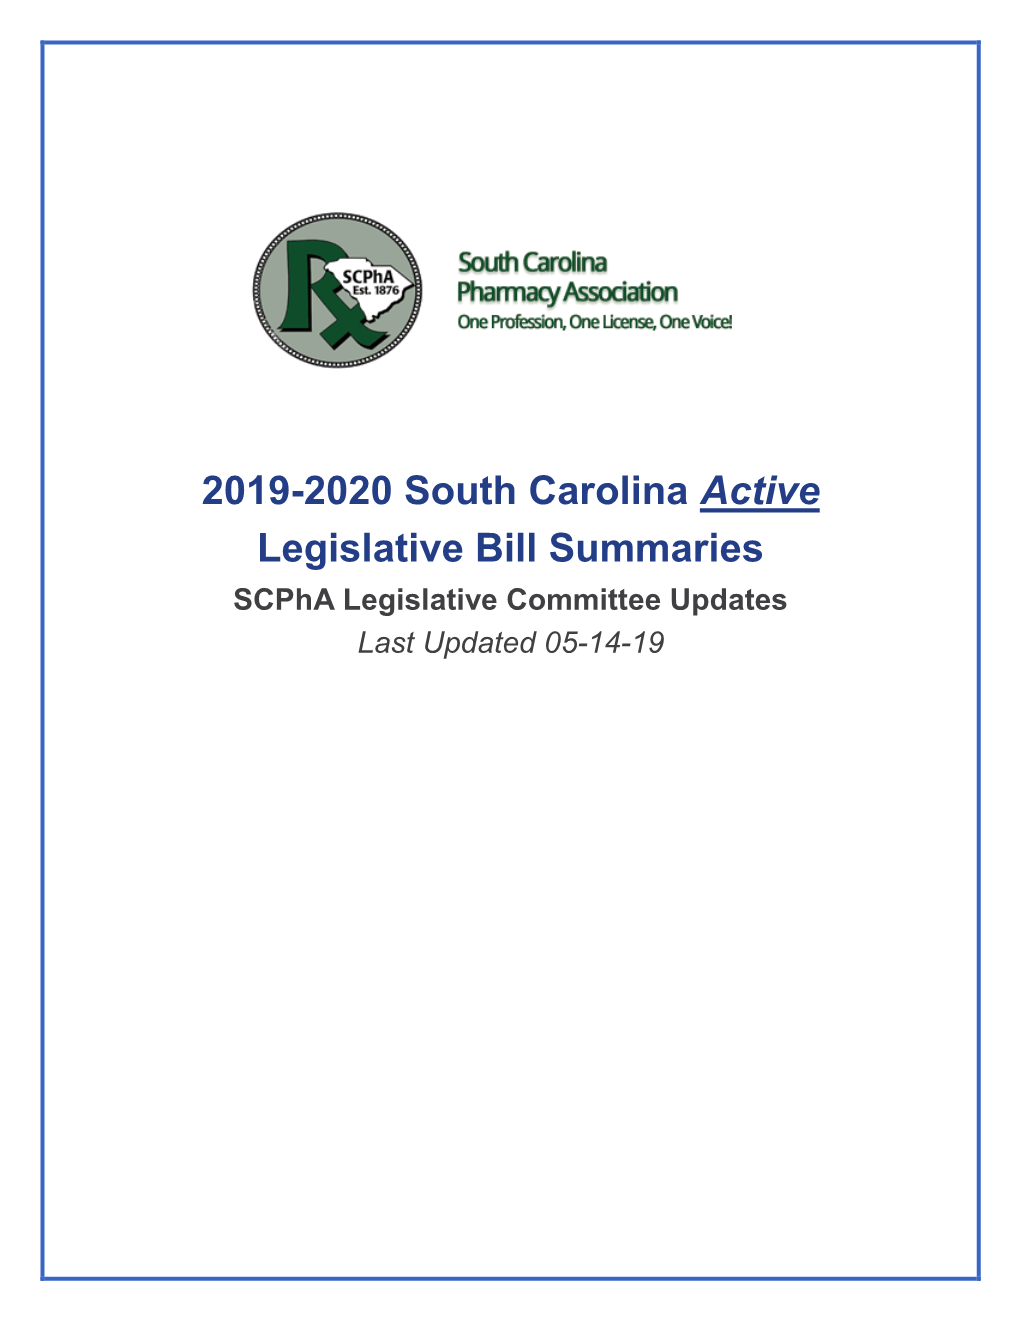 2019-2020 South Carolina Active Legislative Bill Summaries